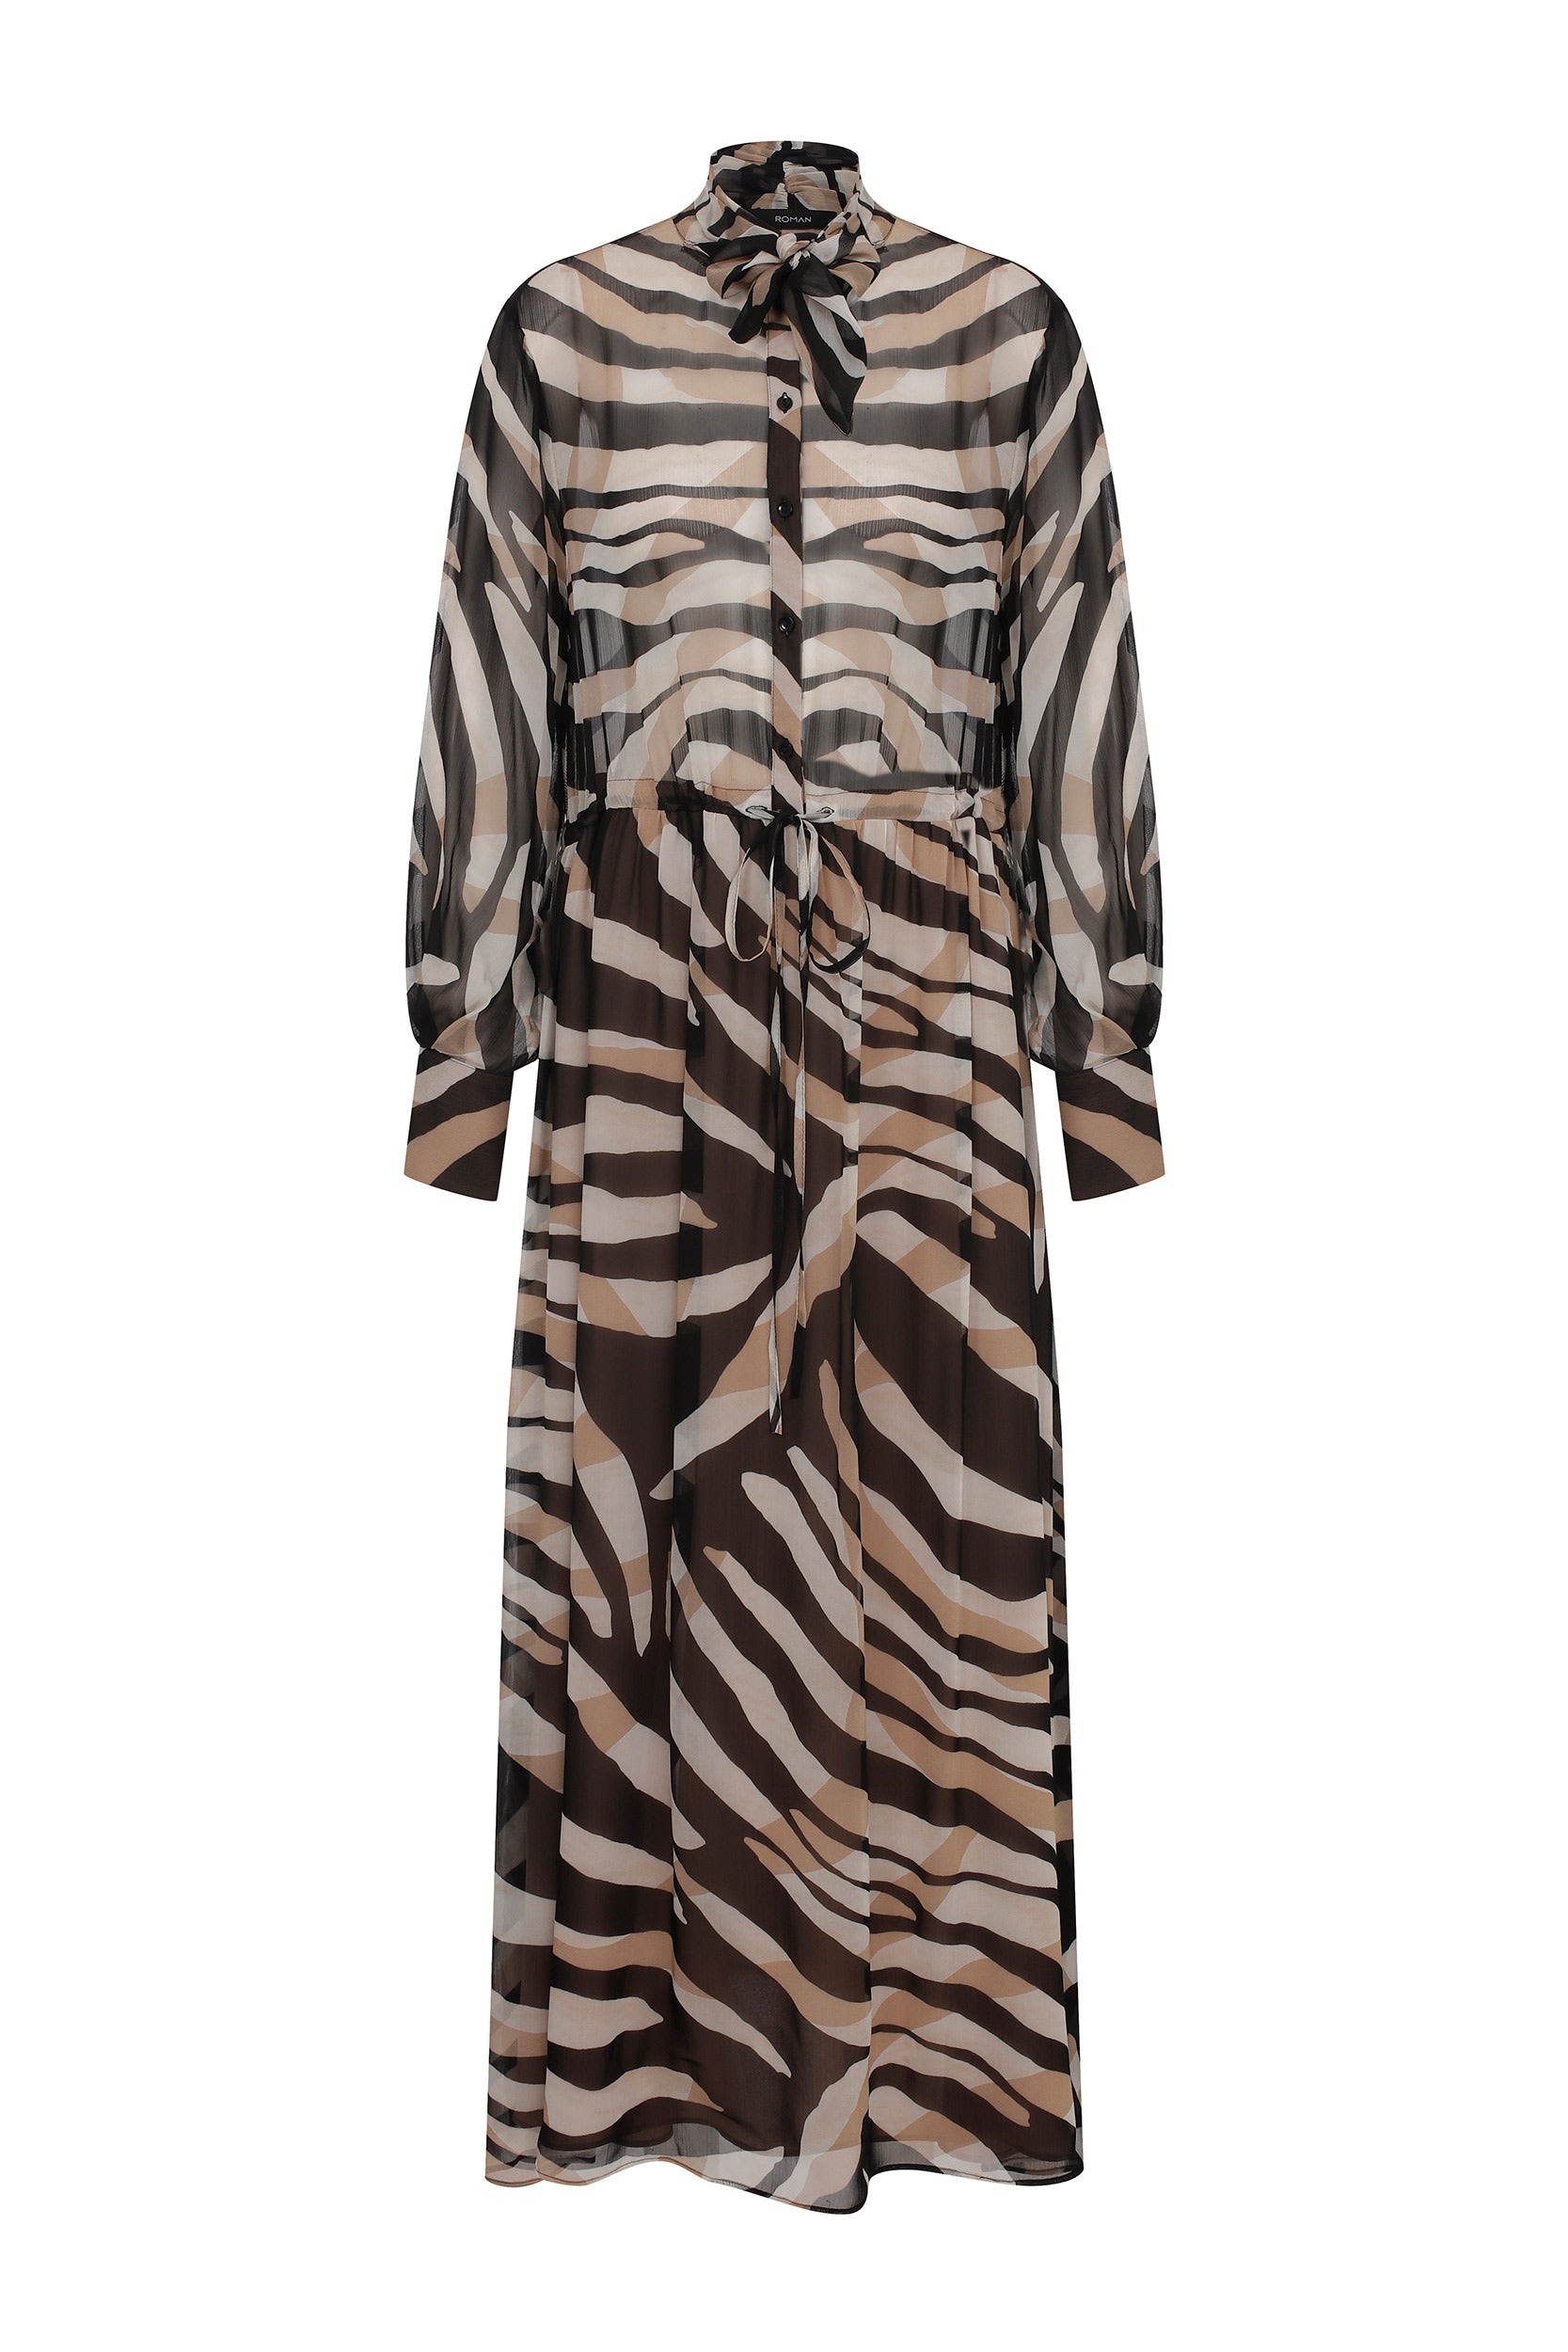 Roman Exotic Tiger Print Dress. 2